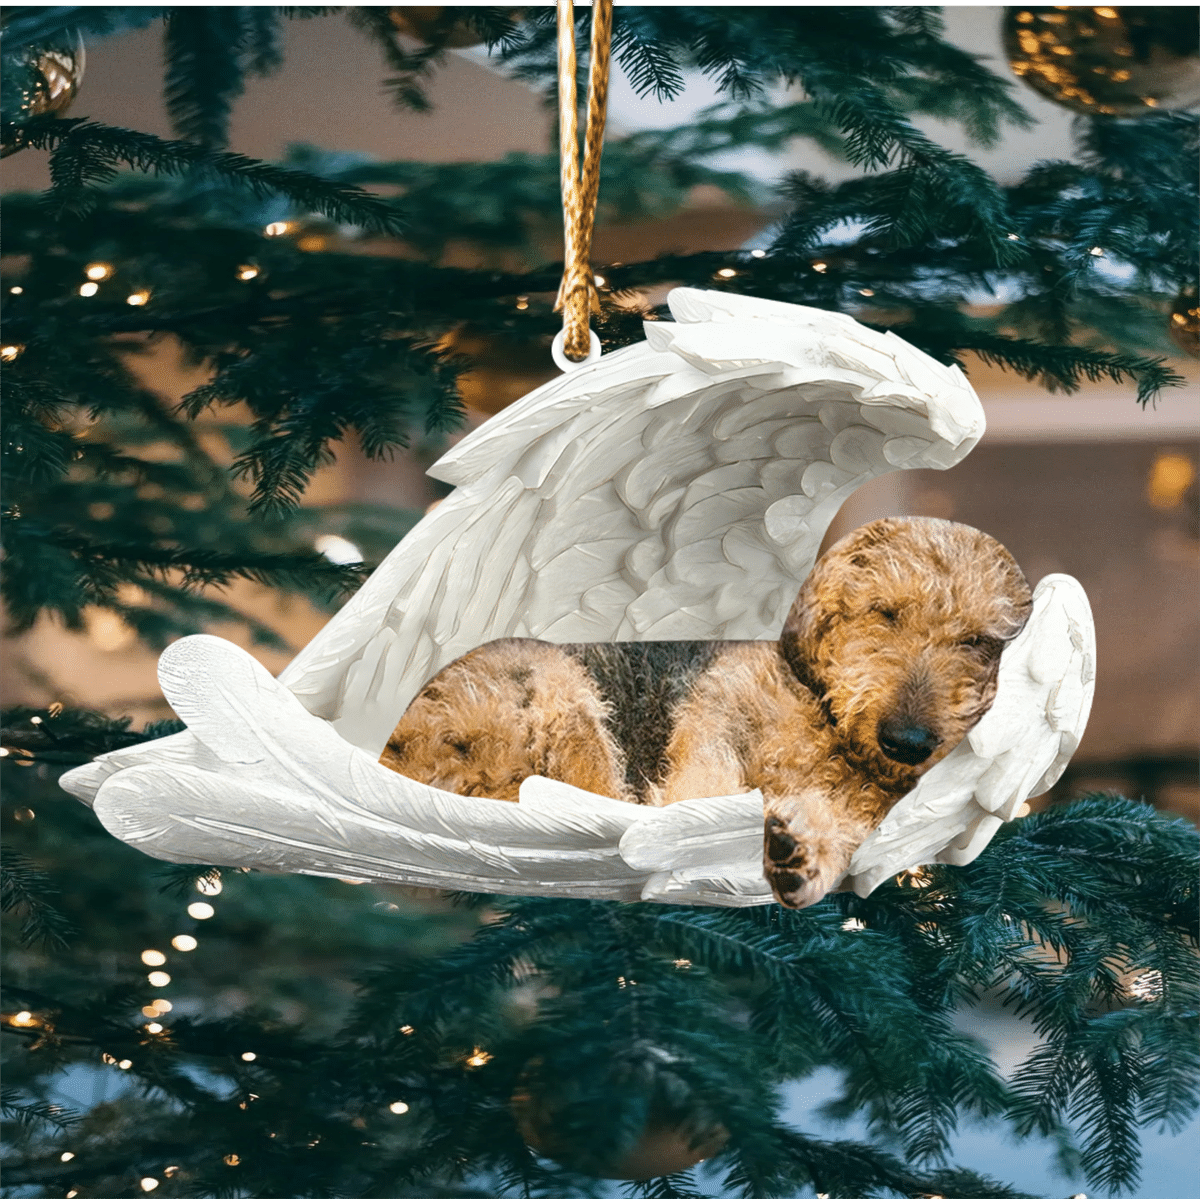 Dog Acrylic Ornament - Dog Sleeping Angel Wings Ornament - Dog